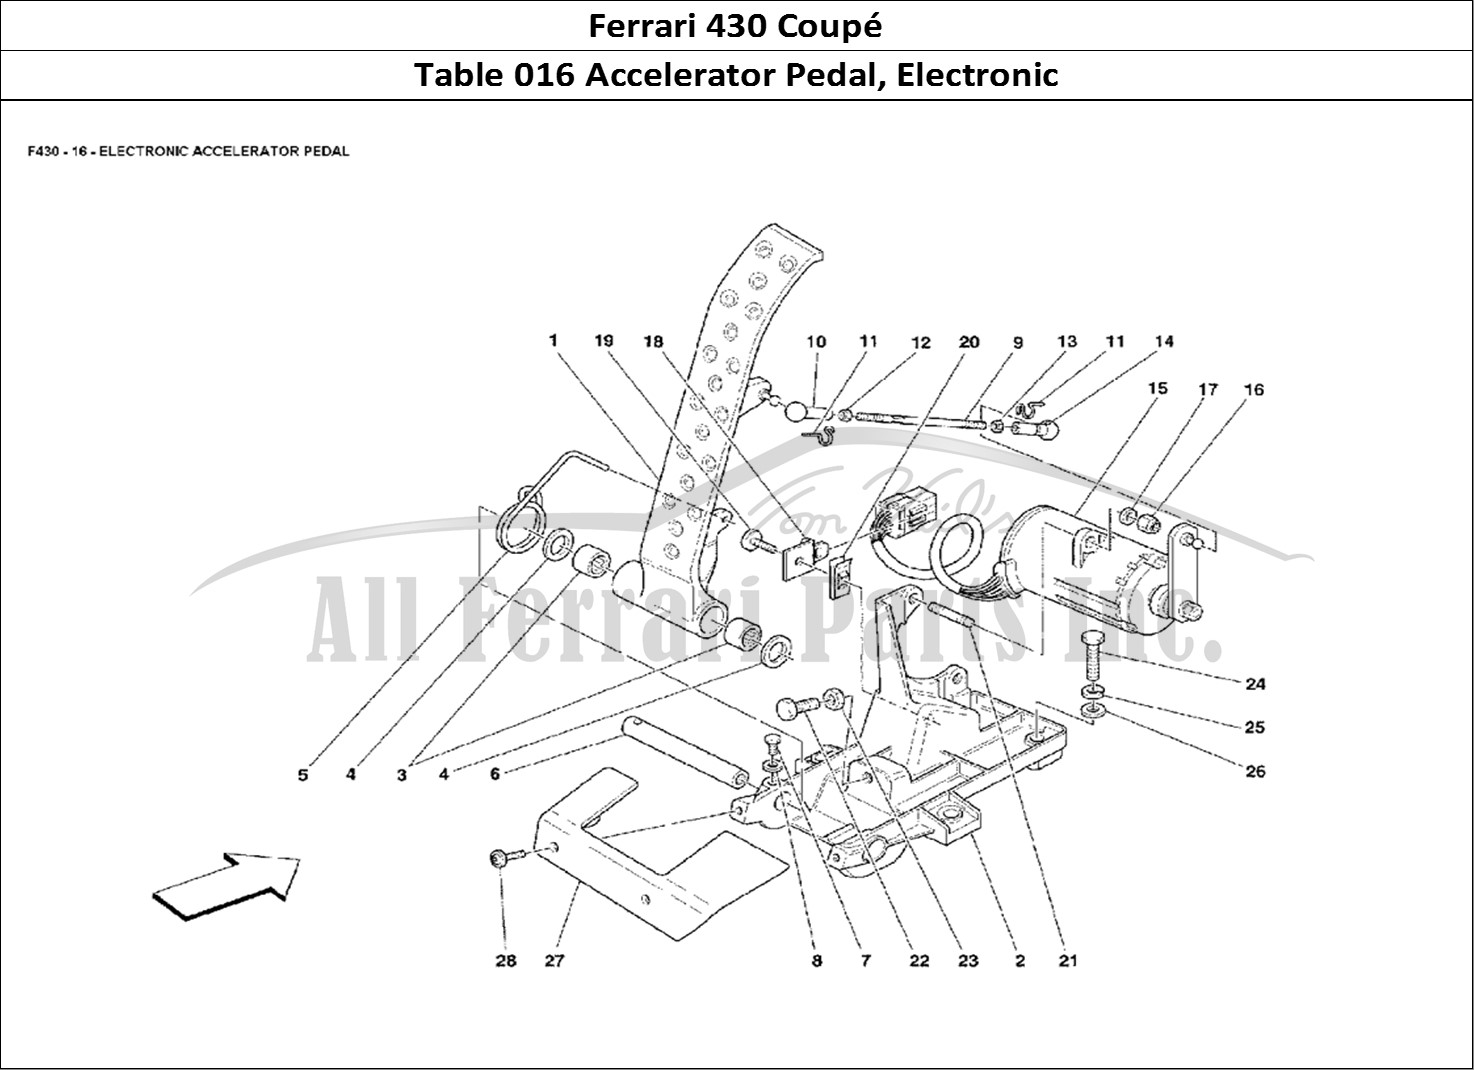 Ferrari Parts Ferrari 430 Coup Page 016 Electronic Accelerator Pe